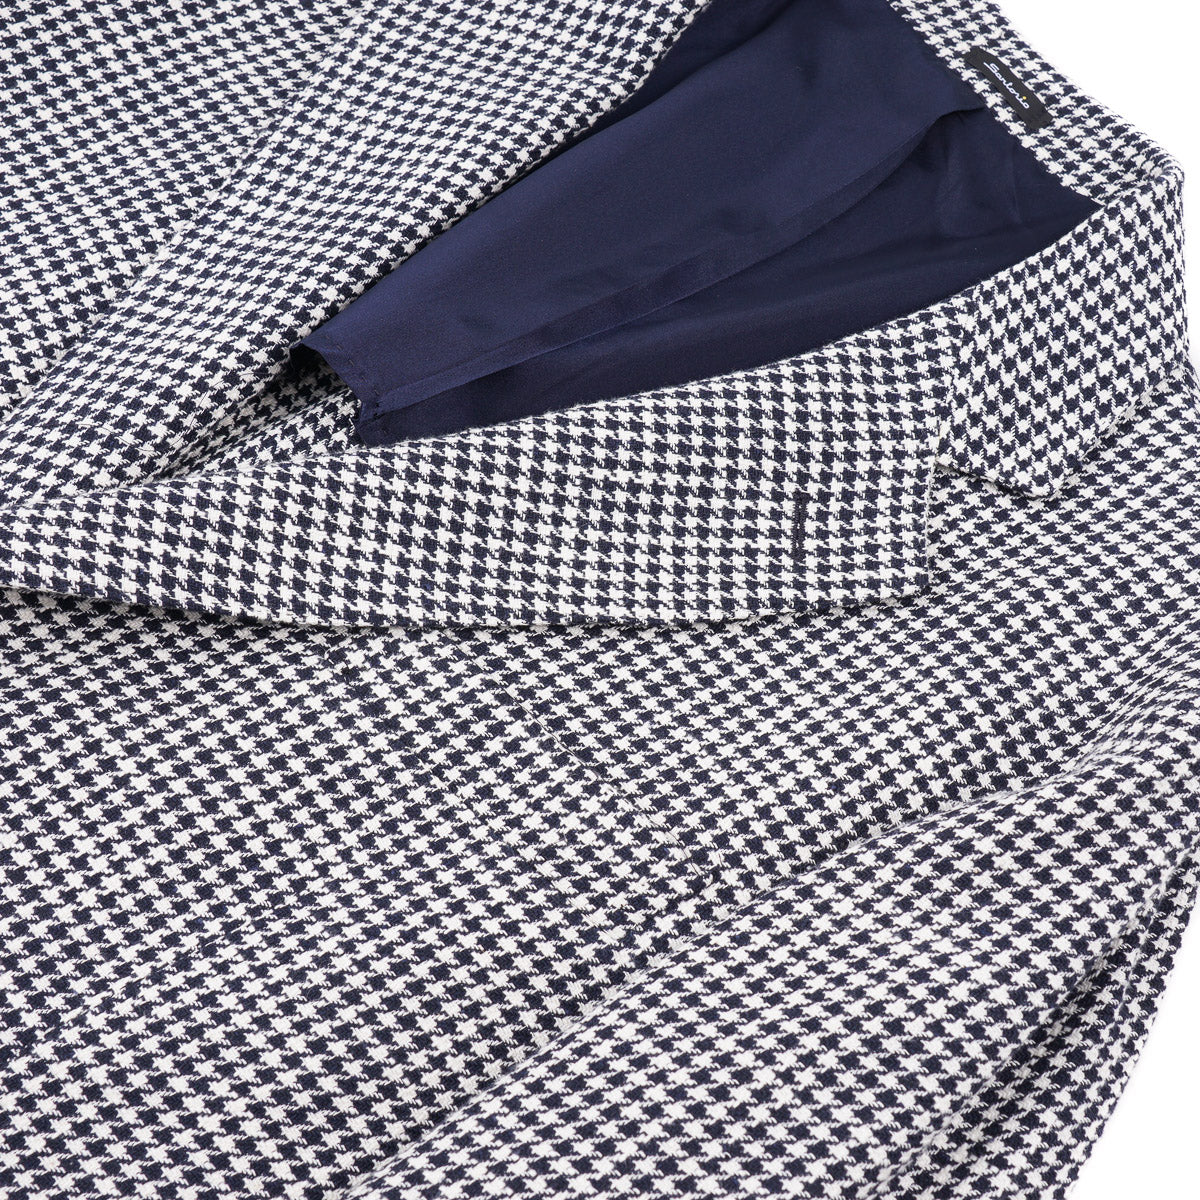 Sartorio Woven Mid-Weight Cotton Overcoat - Top Shelf Apparel